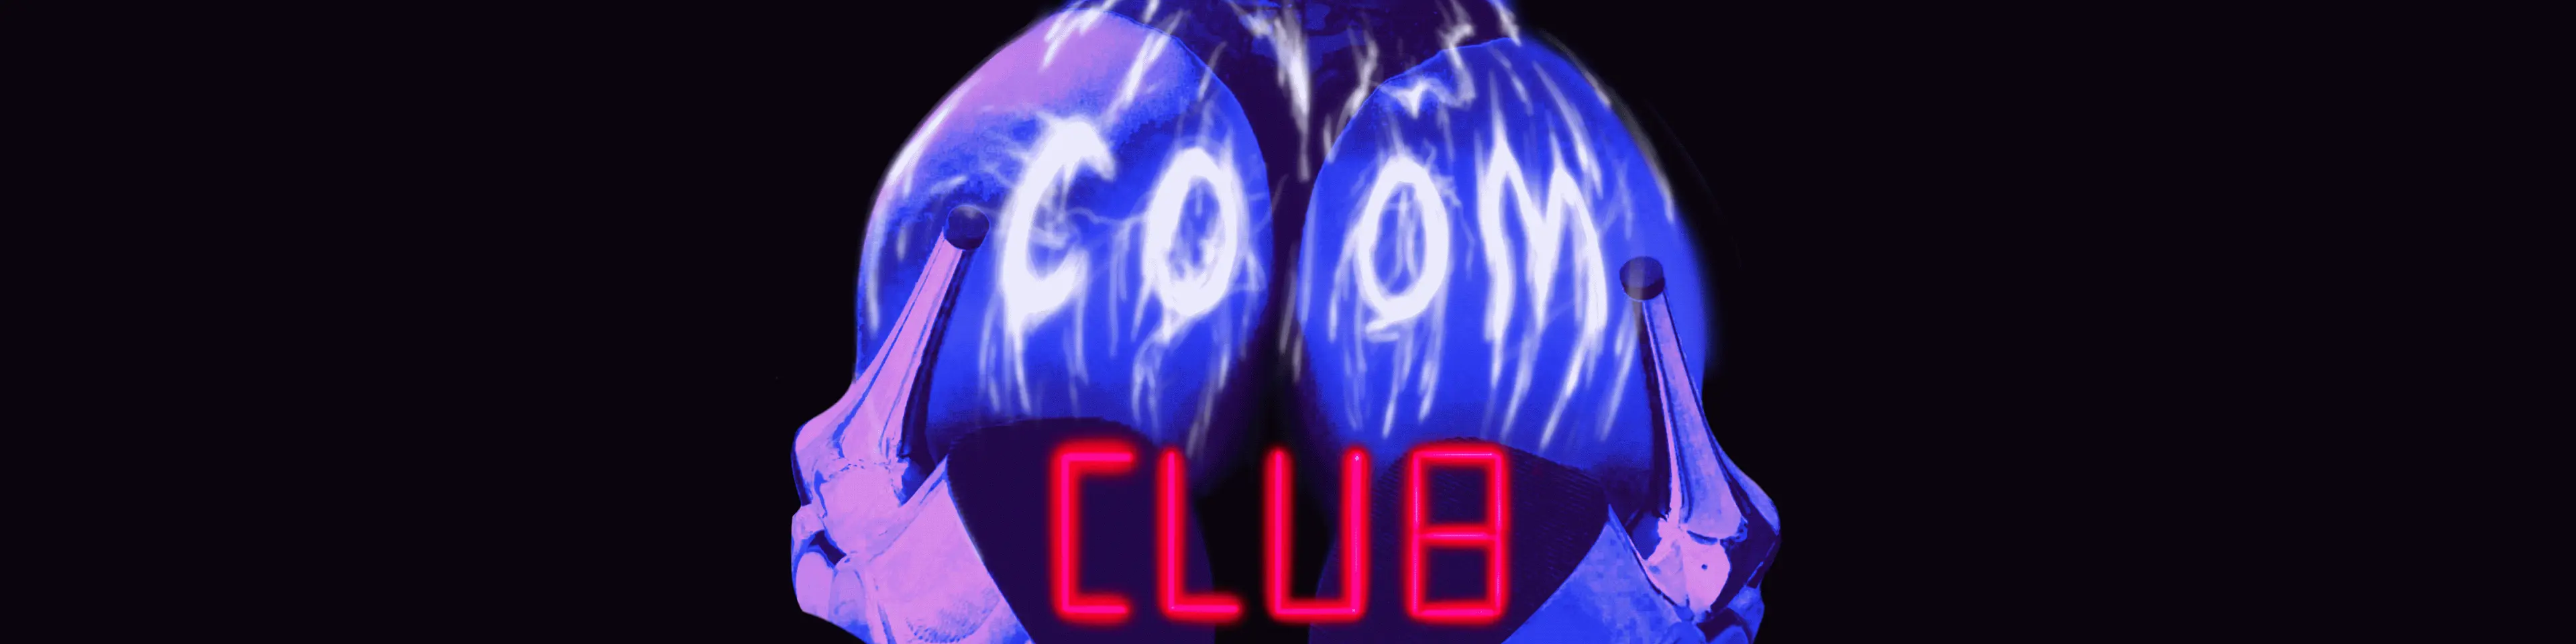 Coom Club main image